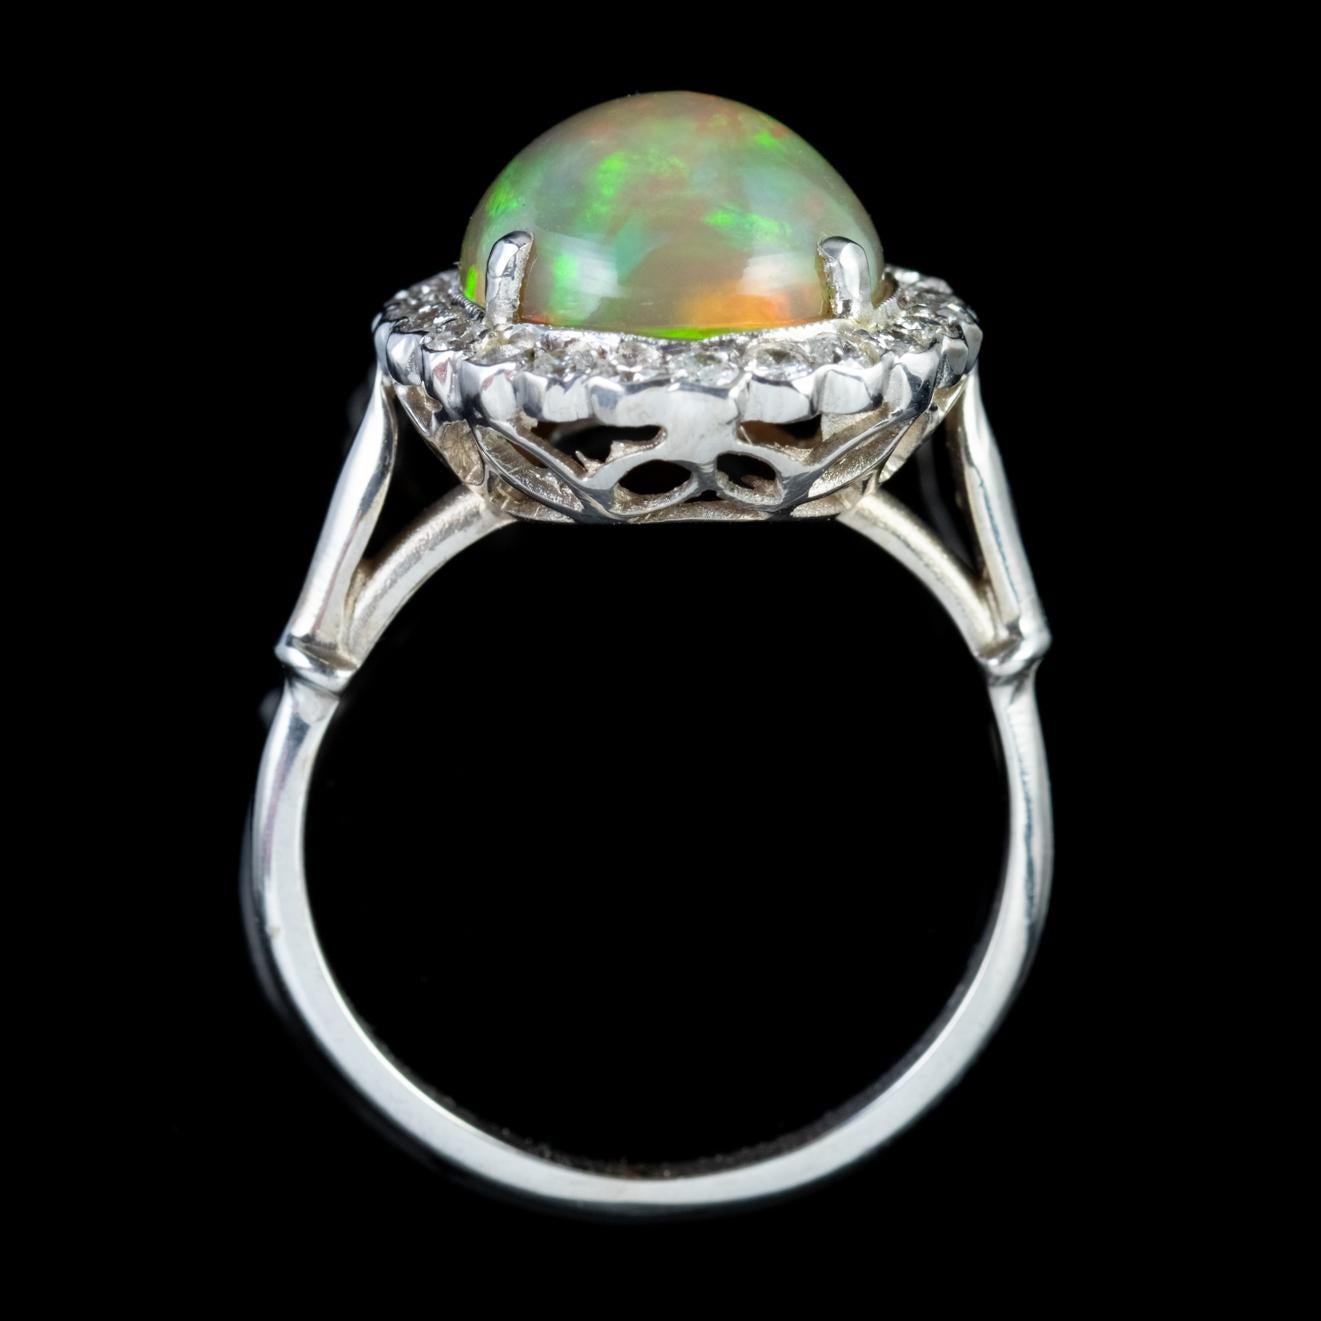 Antique Edwardian Opal Diamond Ring Platinum 6 Carat Natural Opal, circa 1910 For Sale 1